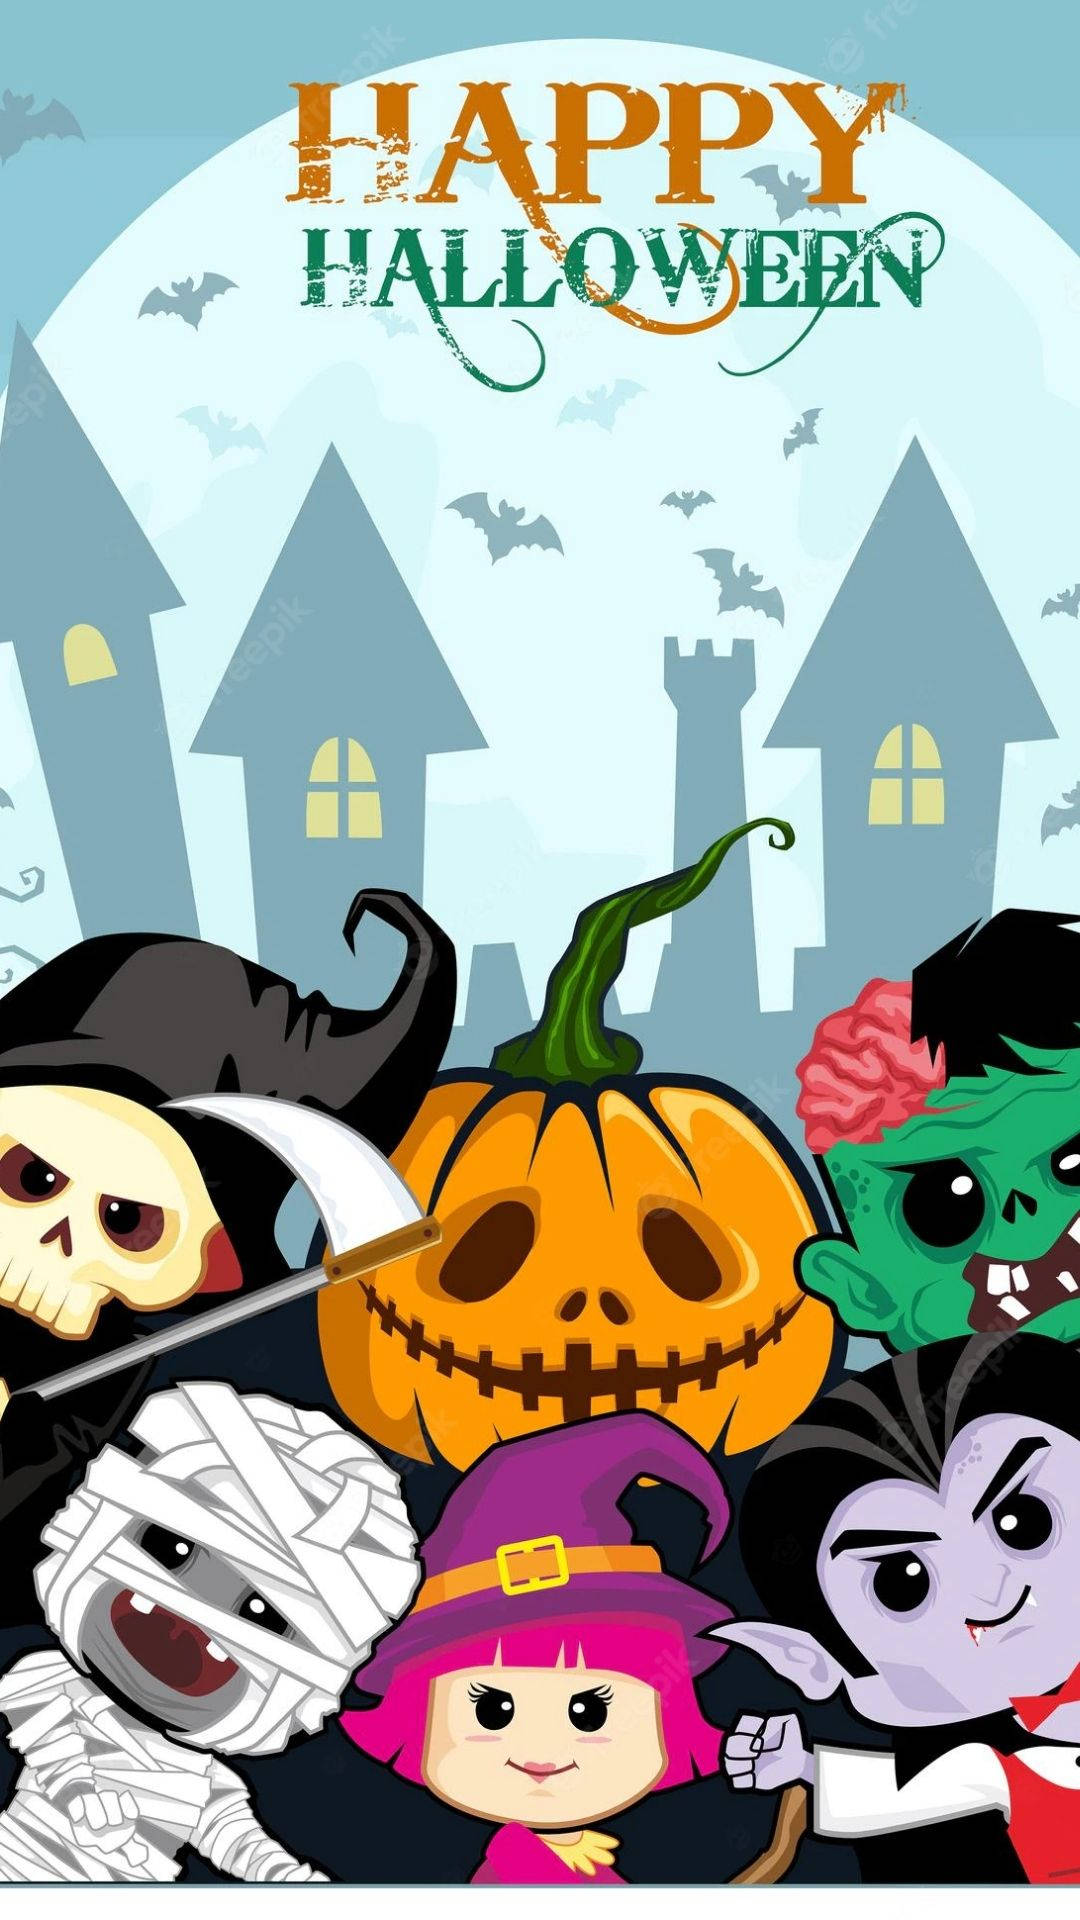 Peeking Cartoon Halloween Characters Background